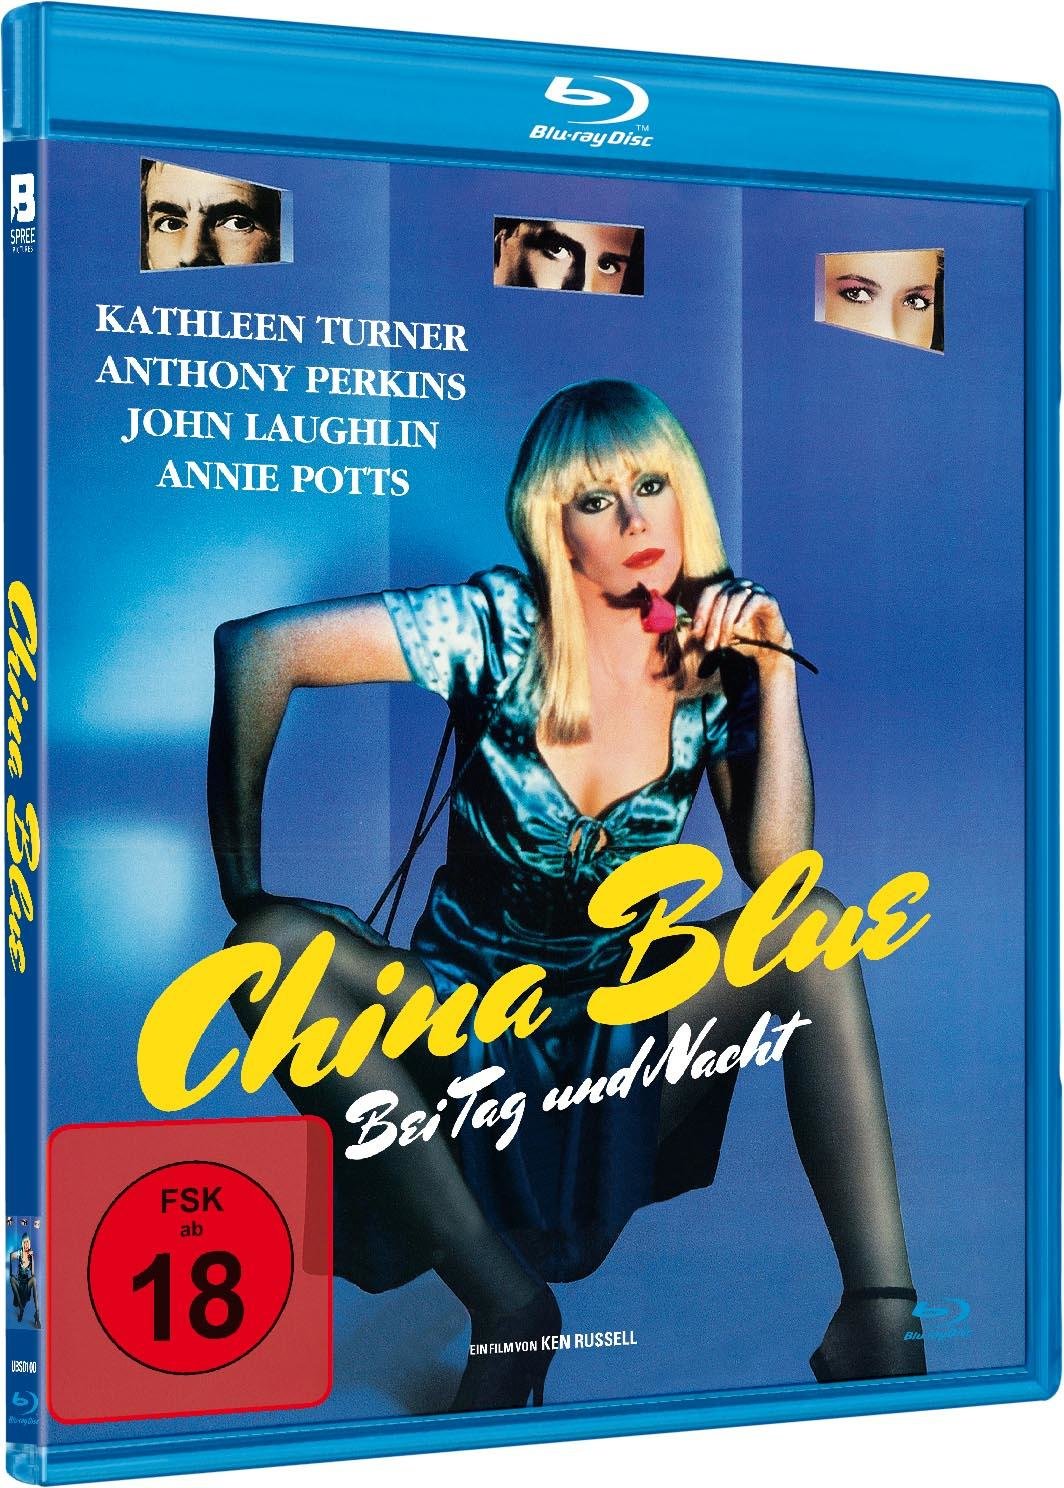 China Blue - Bei Tag und Nacht (blu-ray)